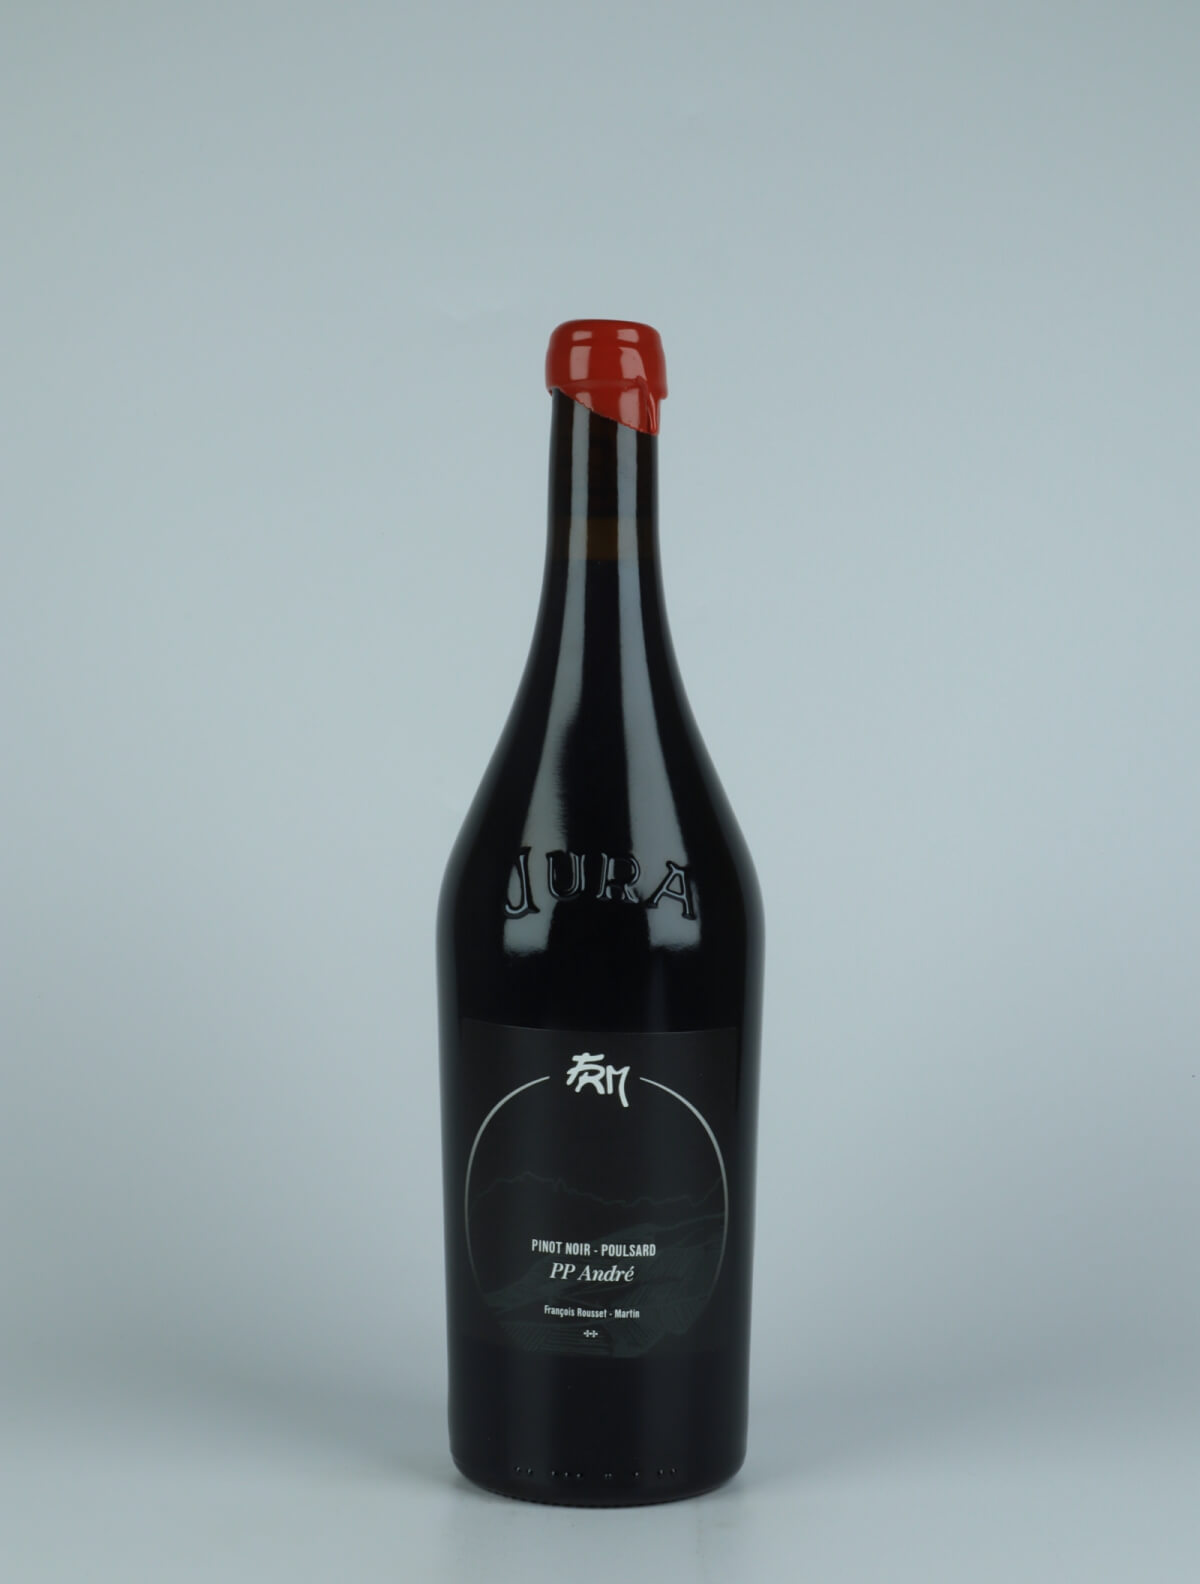 A bottle 2019 PP André - Poulsard & Pinot Noir Red wine from François Rousset-Martin, Jura in France